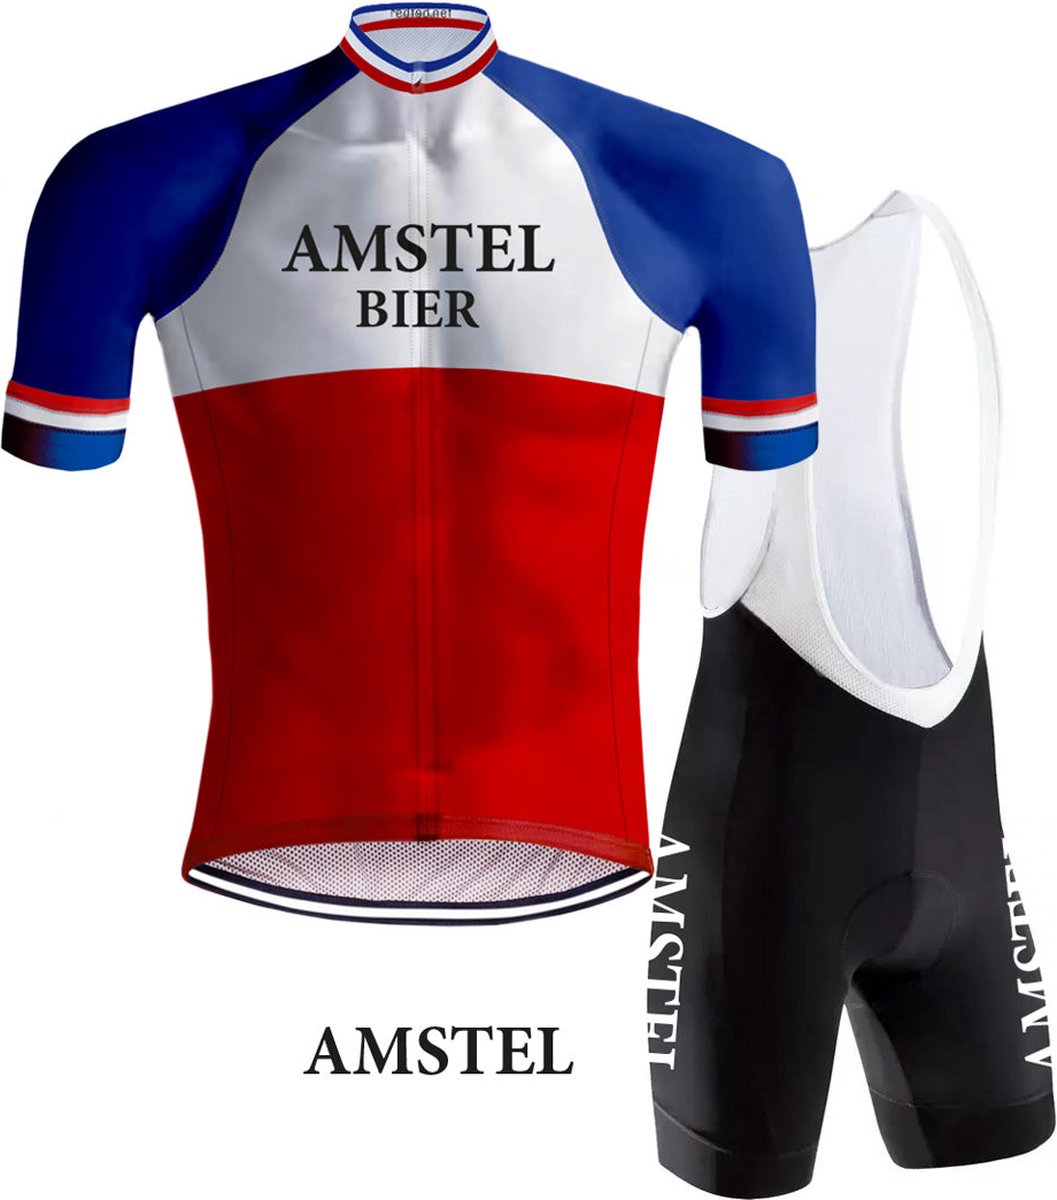 Retro Wielertenue Amstel Bier Rood/Blauw - REDTED (S)